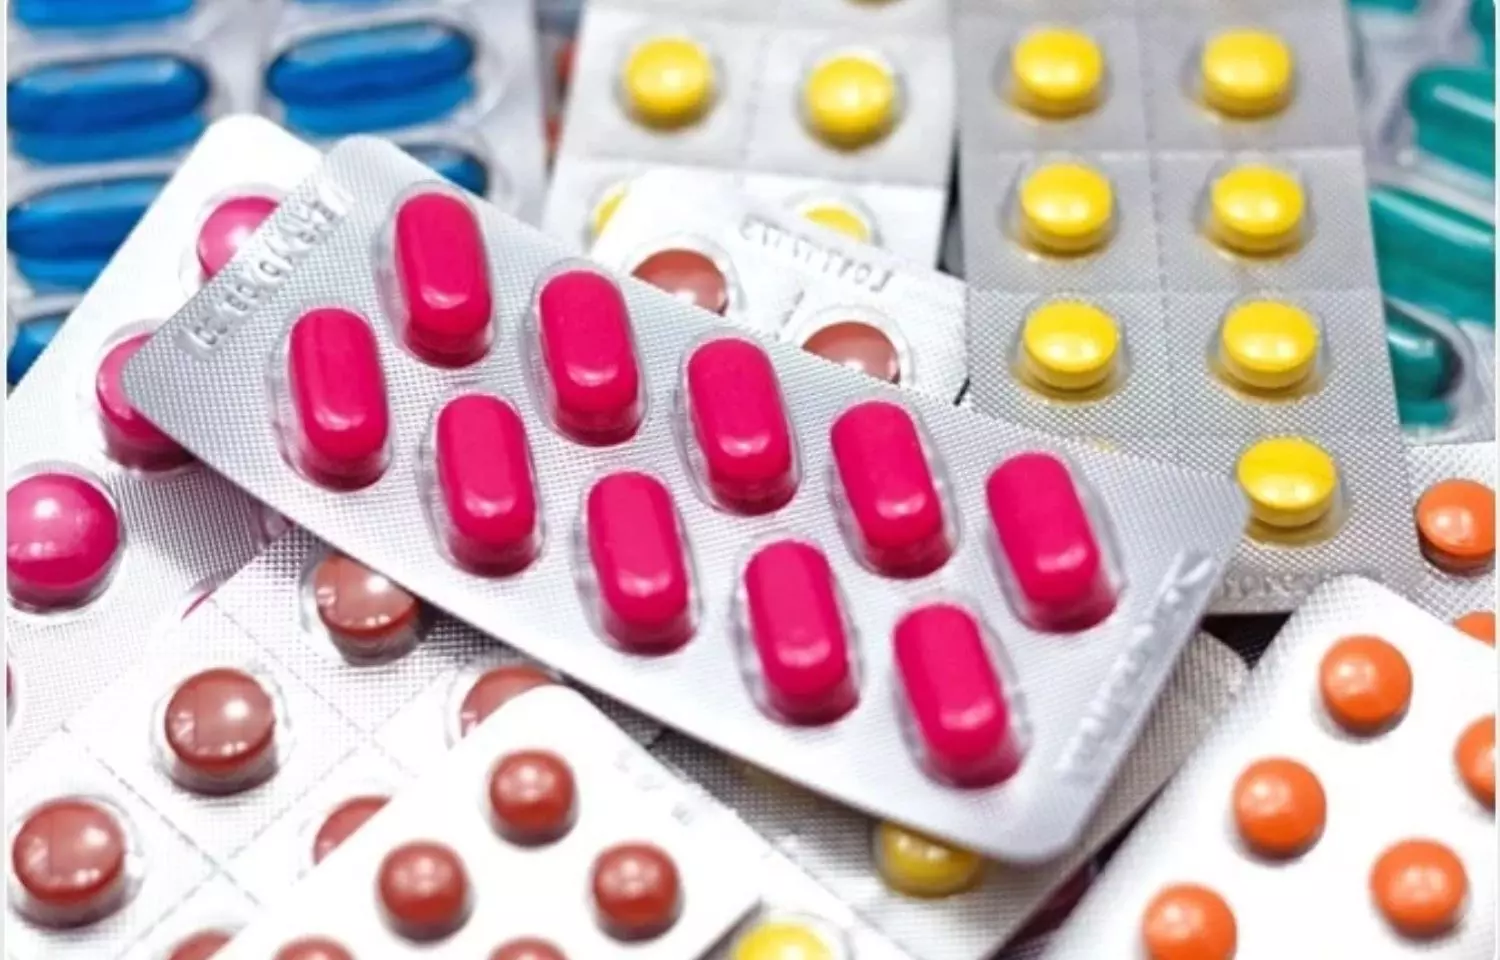 53 Drug Samples Fail To Clear CDSCO Test, 1 Declared Misbranded